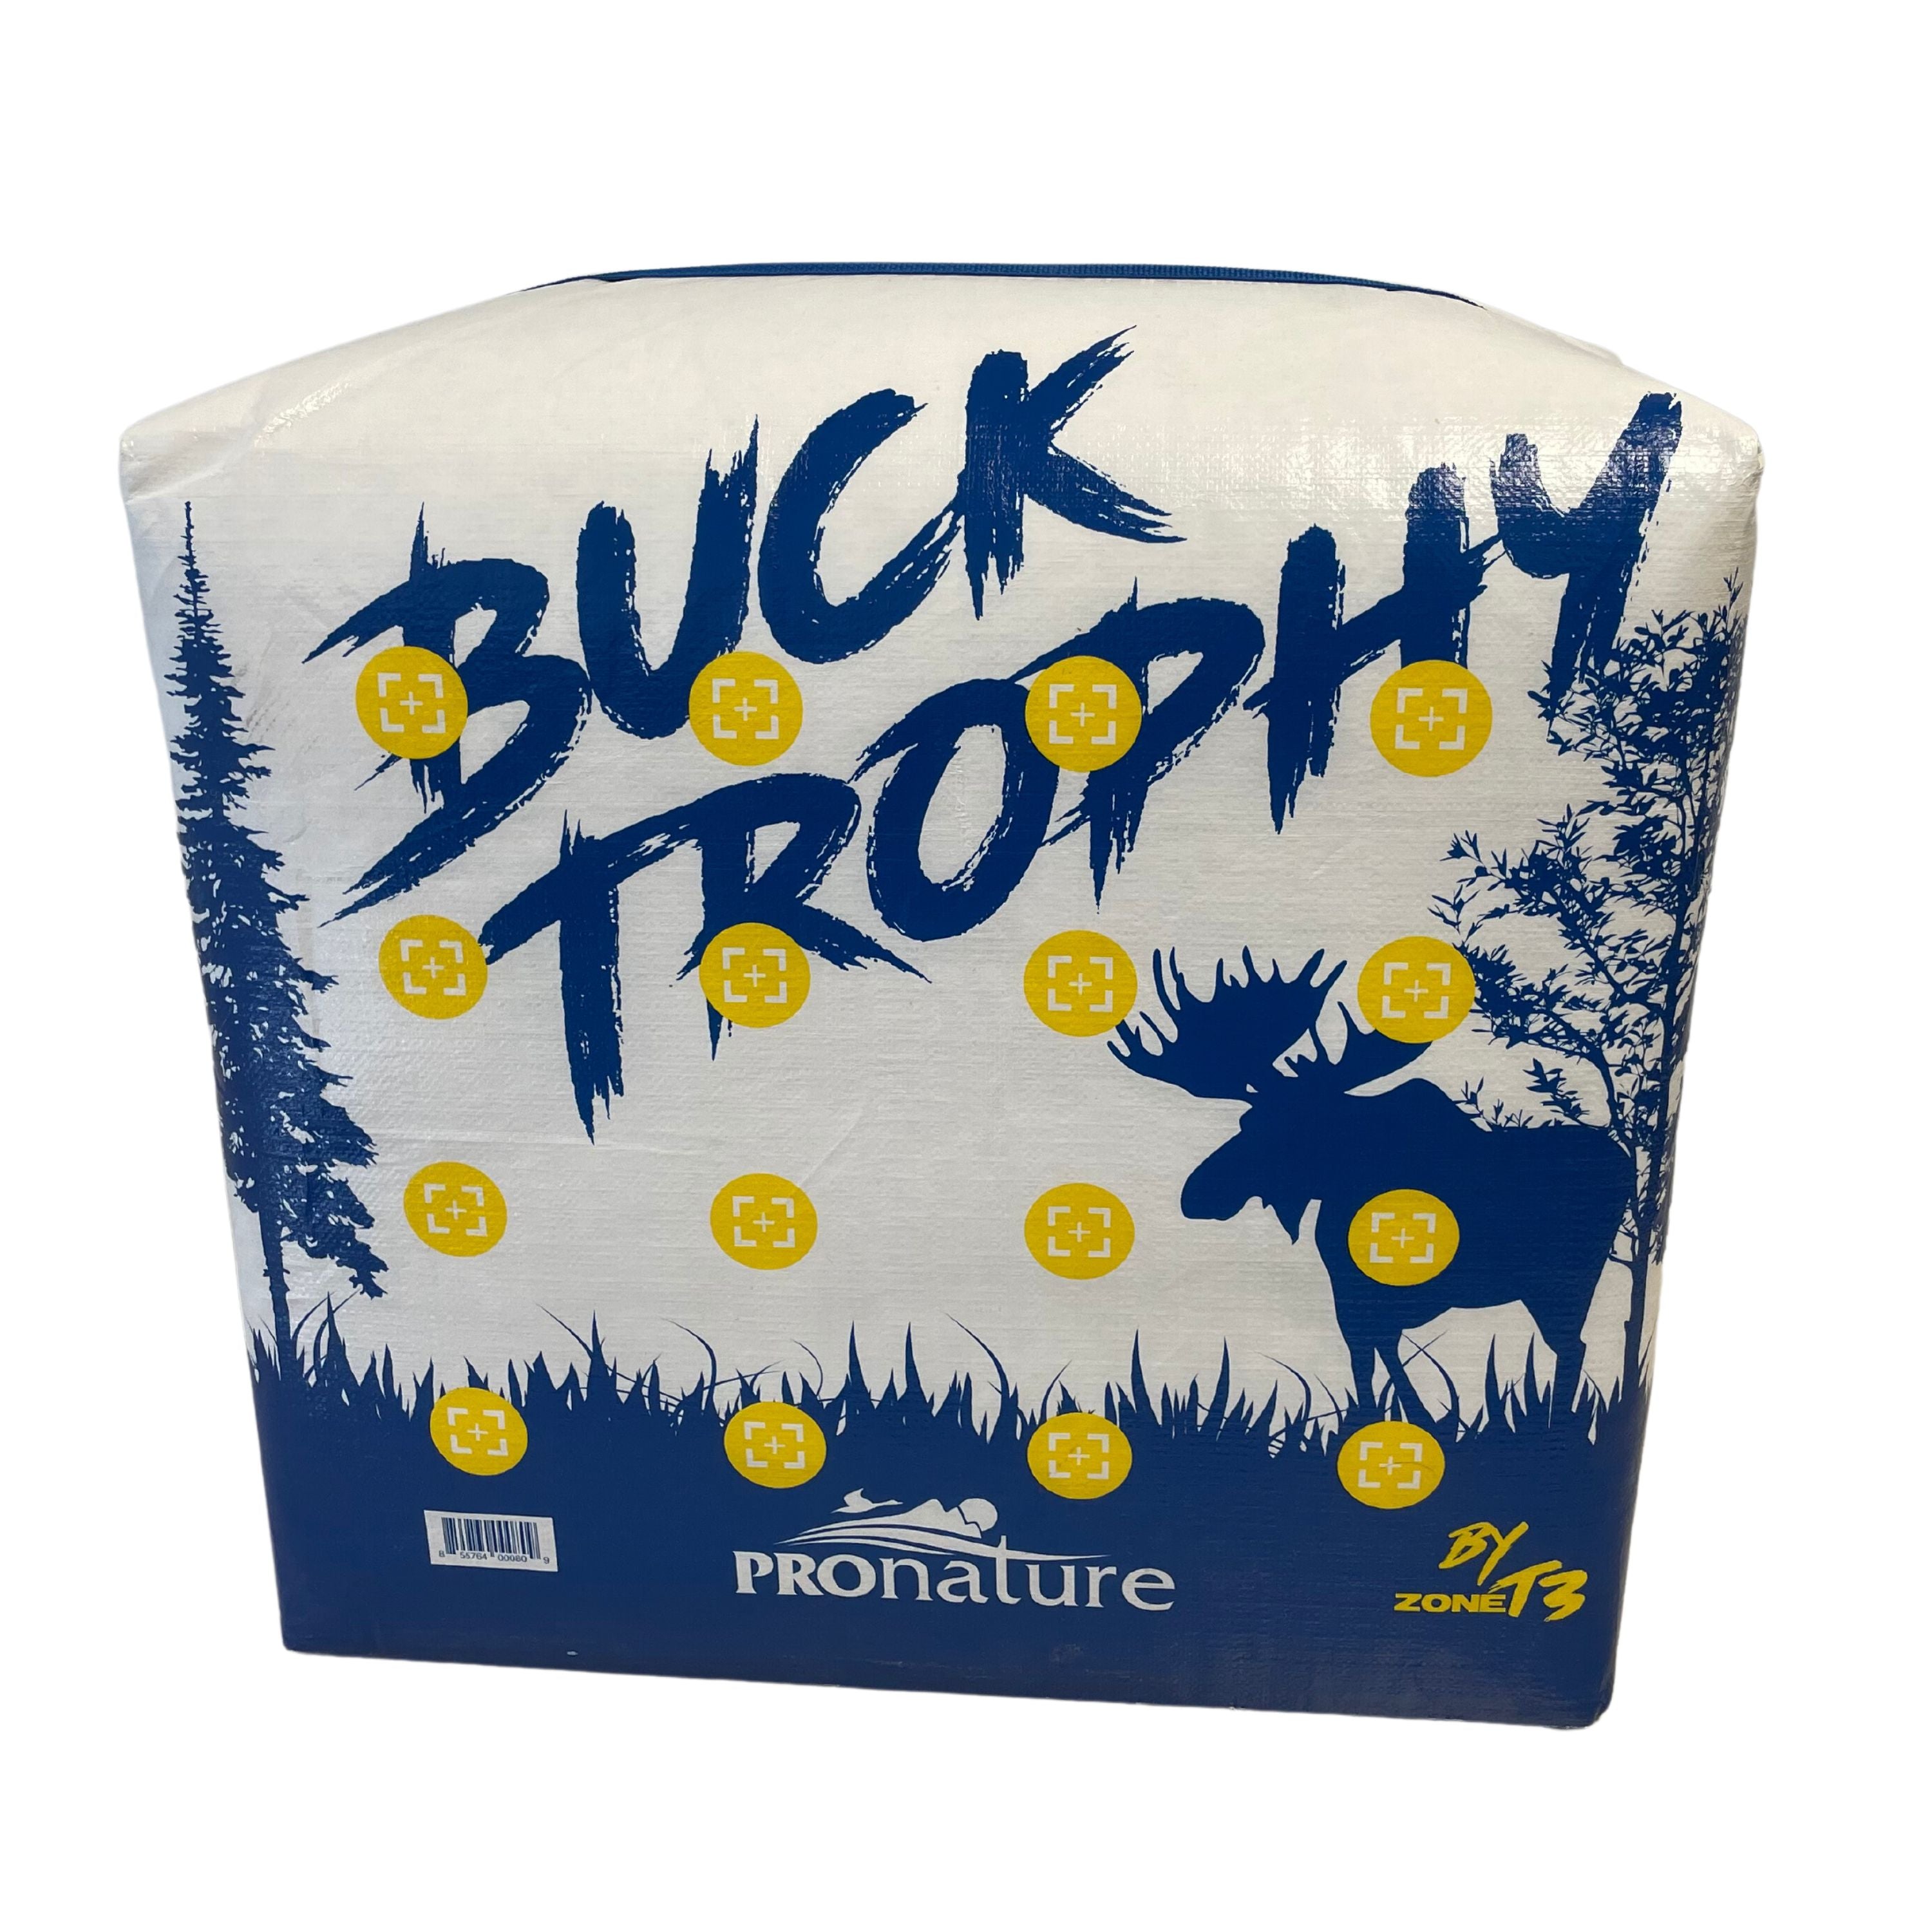 Buck Trophy "T-400" Target